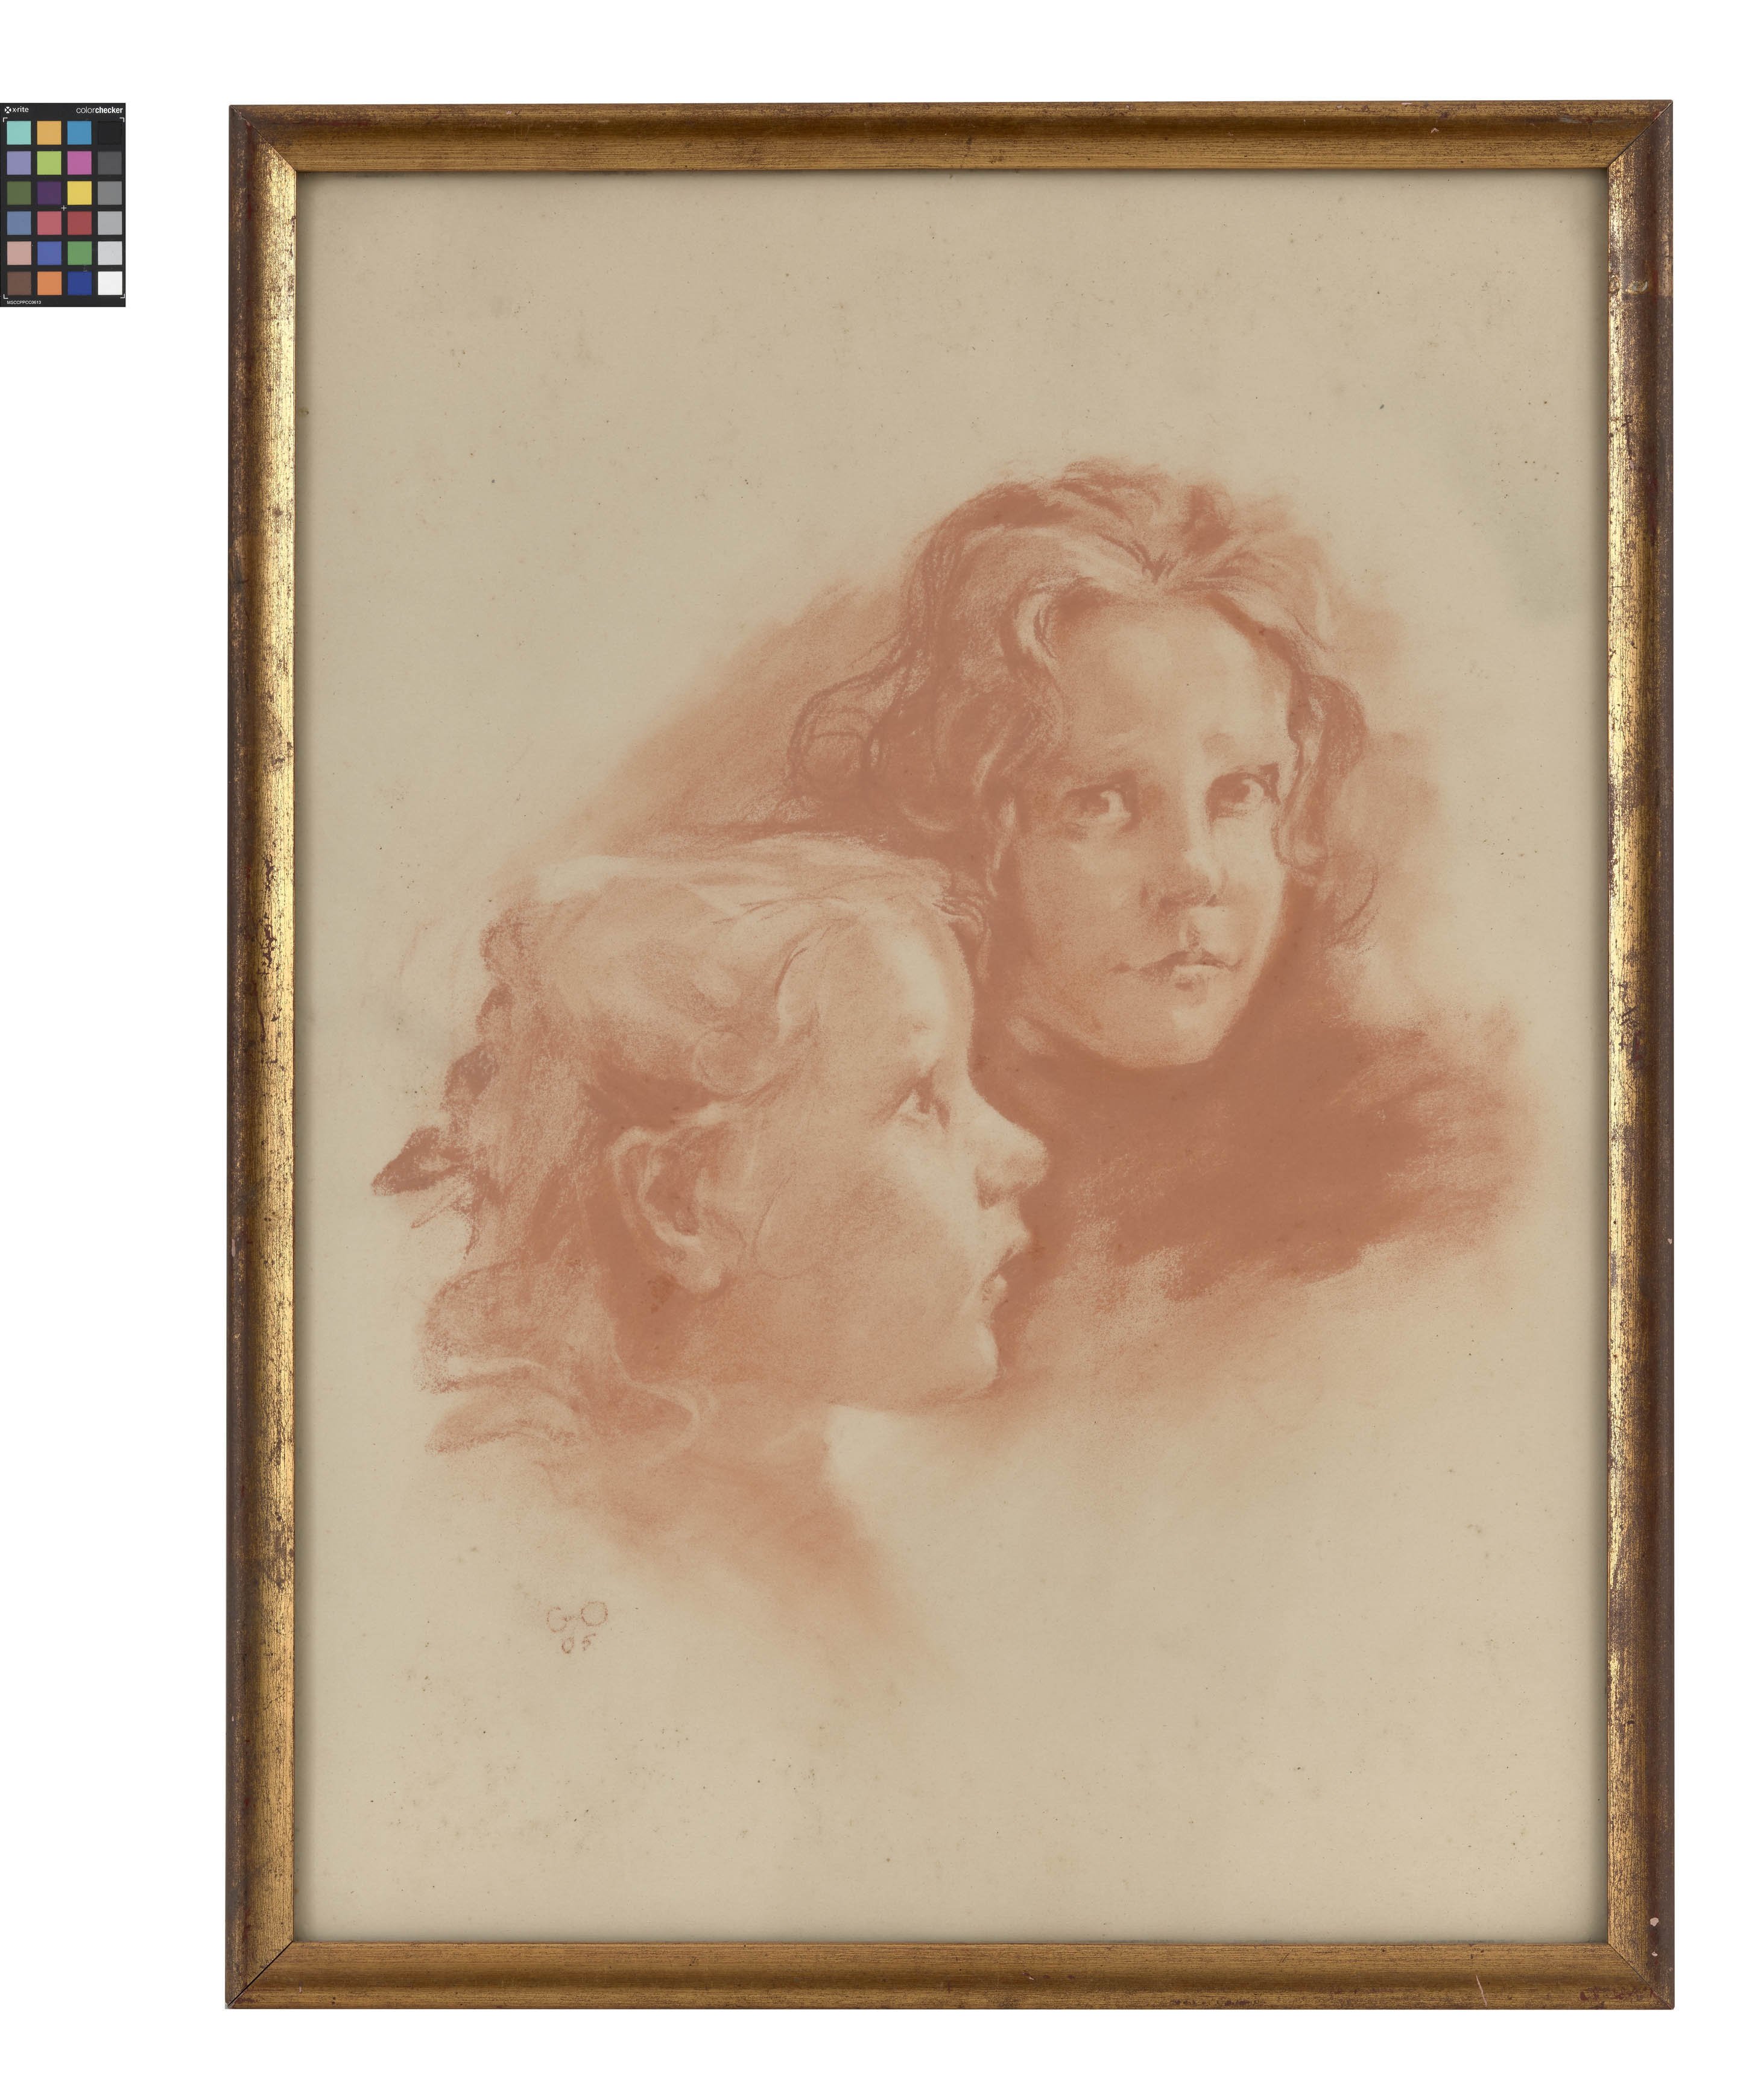 Bolusbild: Porträts zweier Kinder (Kreismuseum Grimma RR-F)